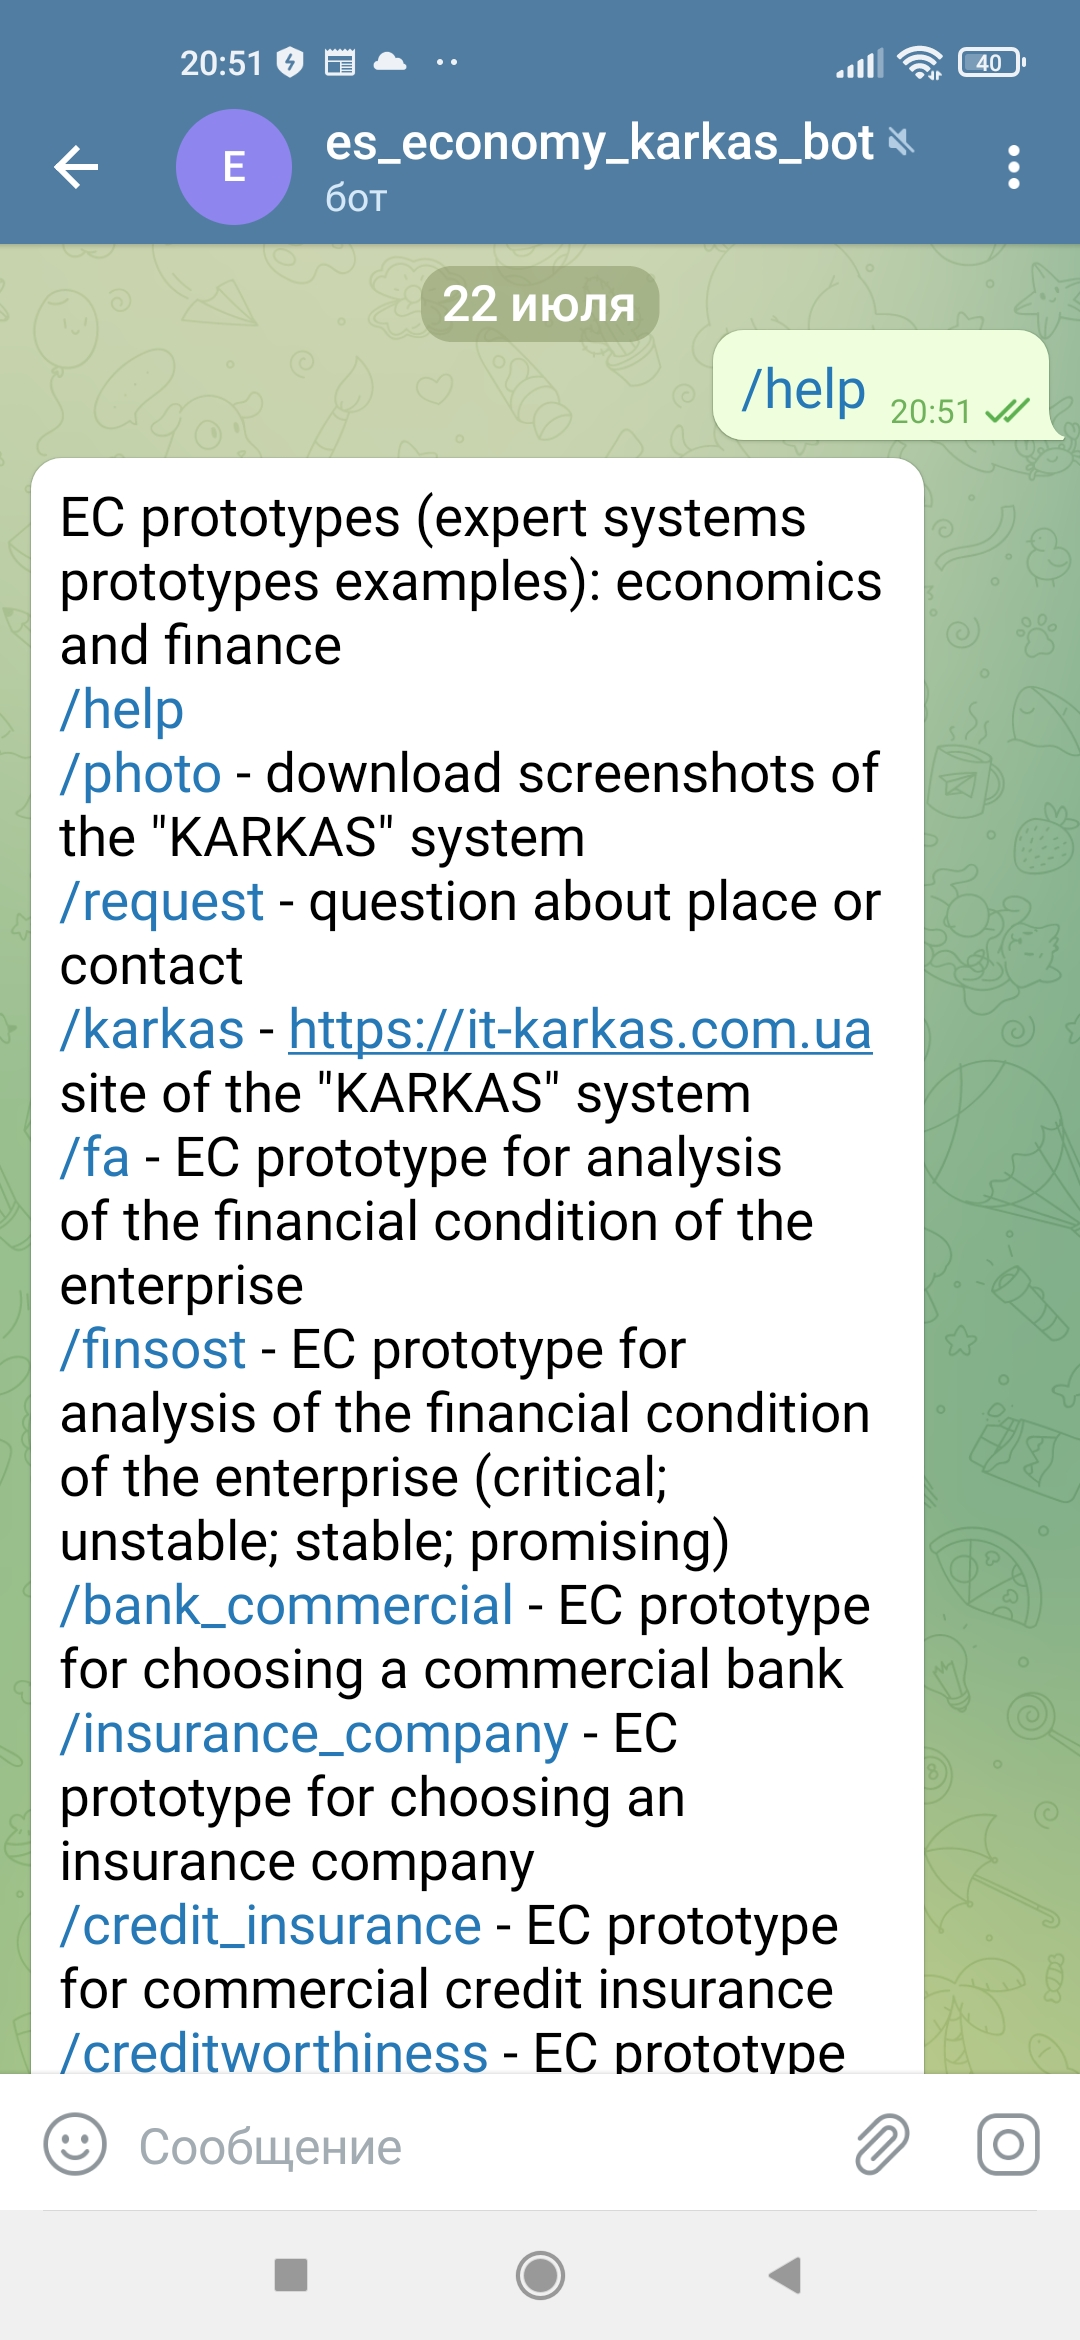 @es_economy_karkas_bot